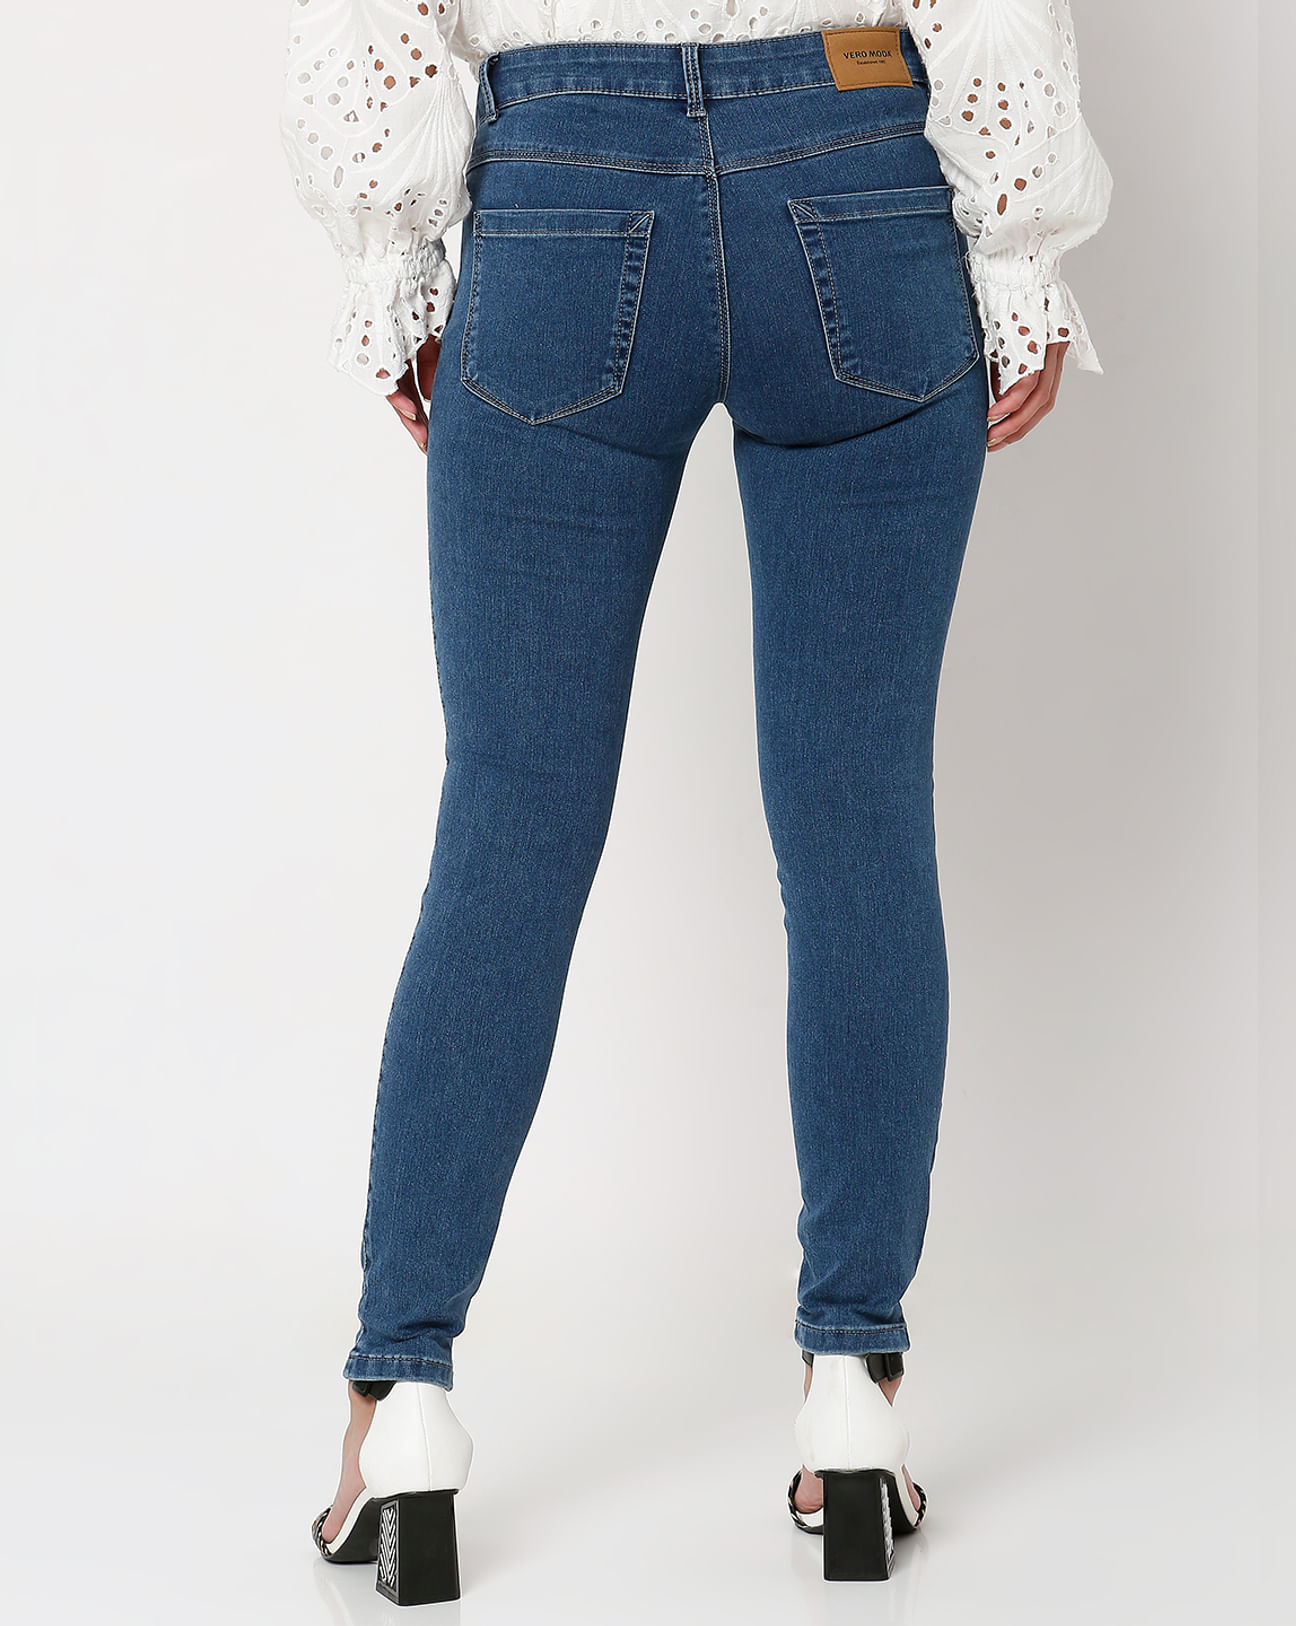 Buy Blue Mid Rise Skinny Jeans for Women Online